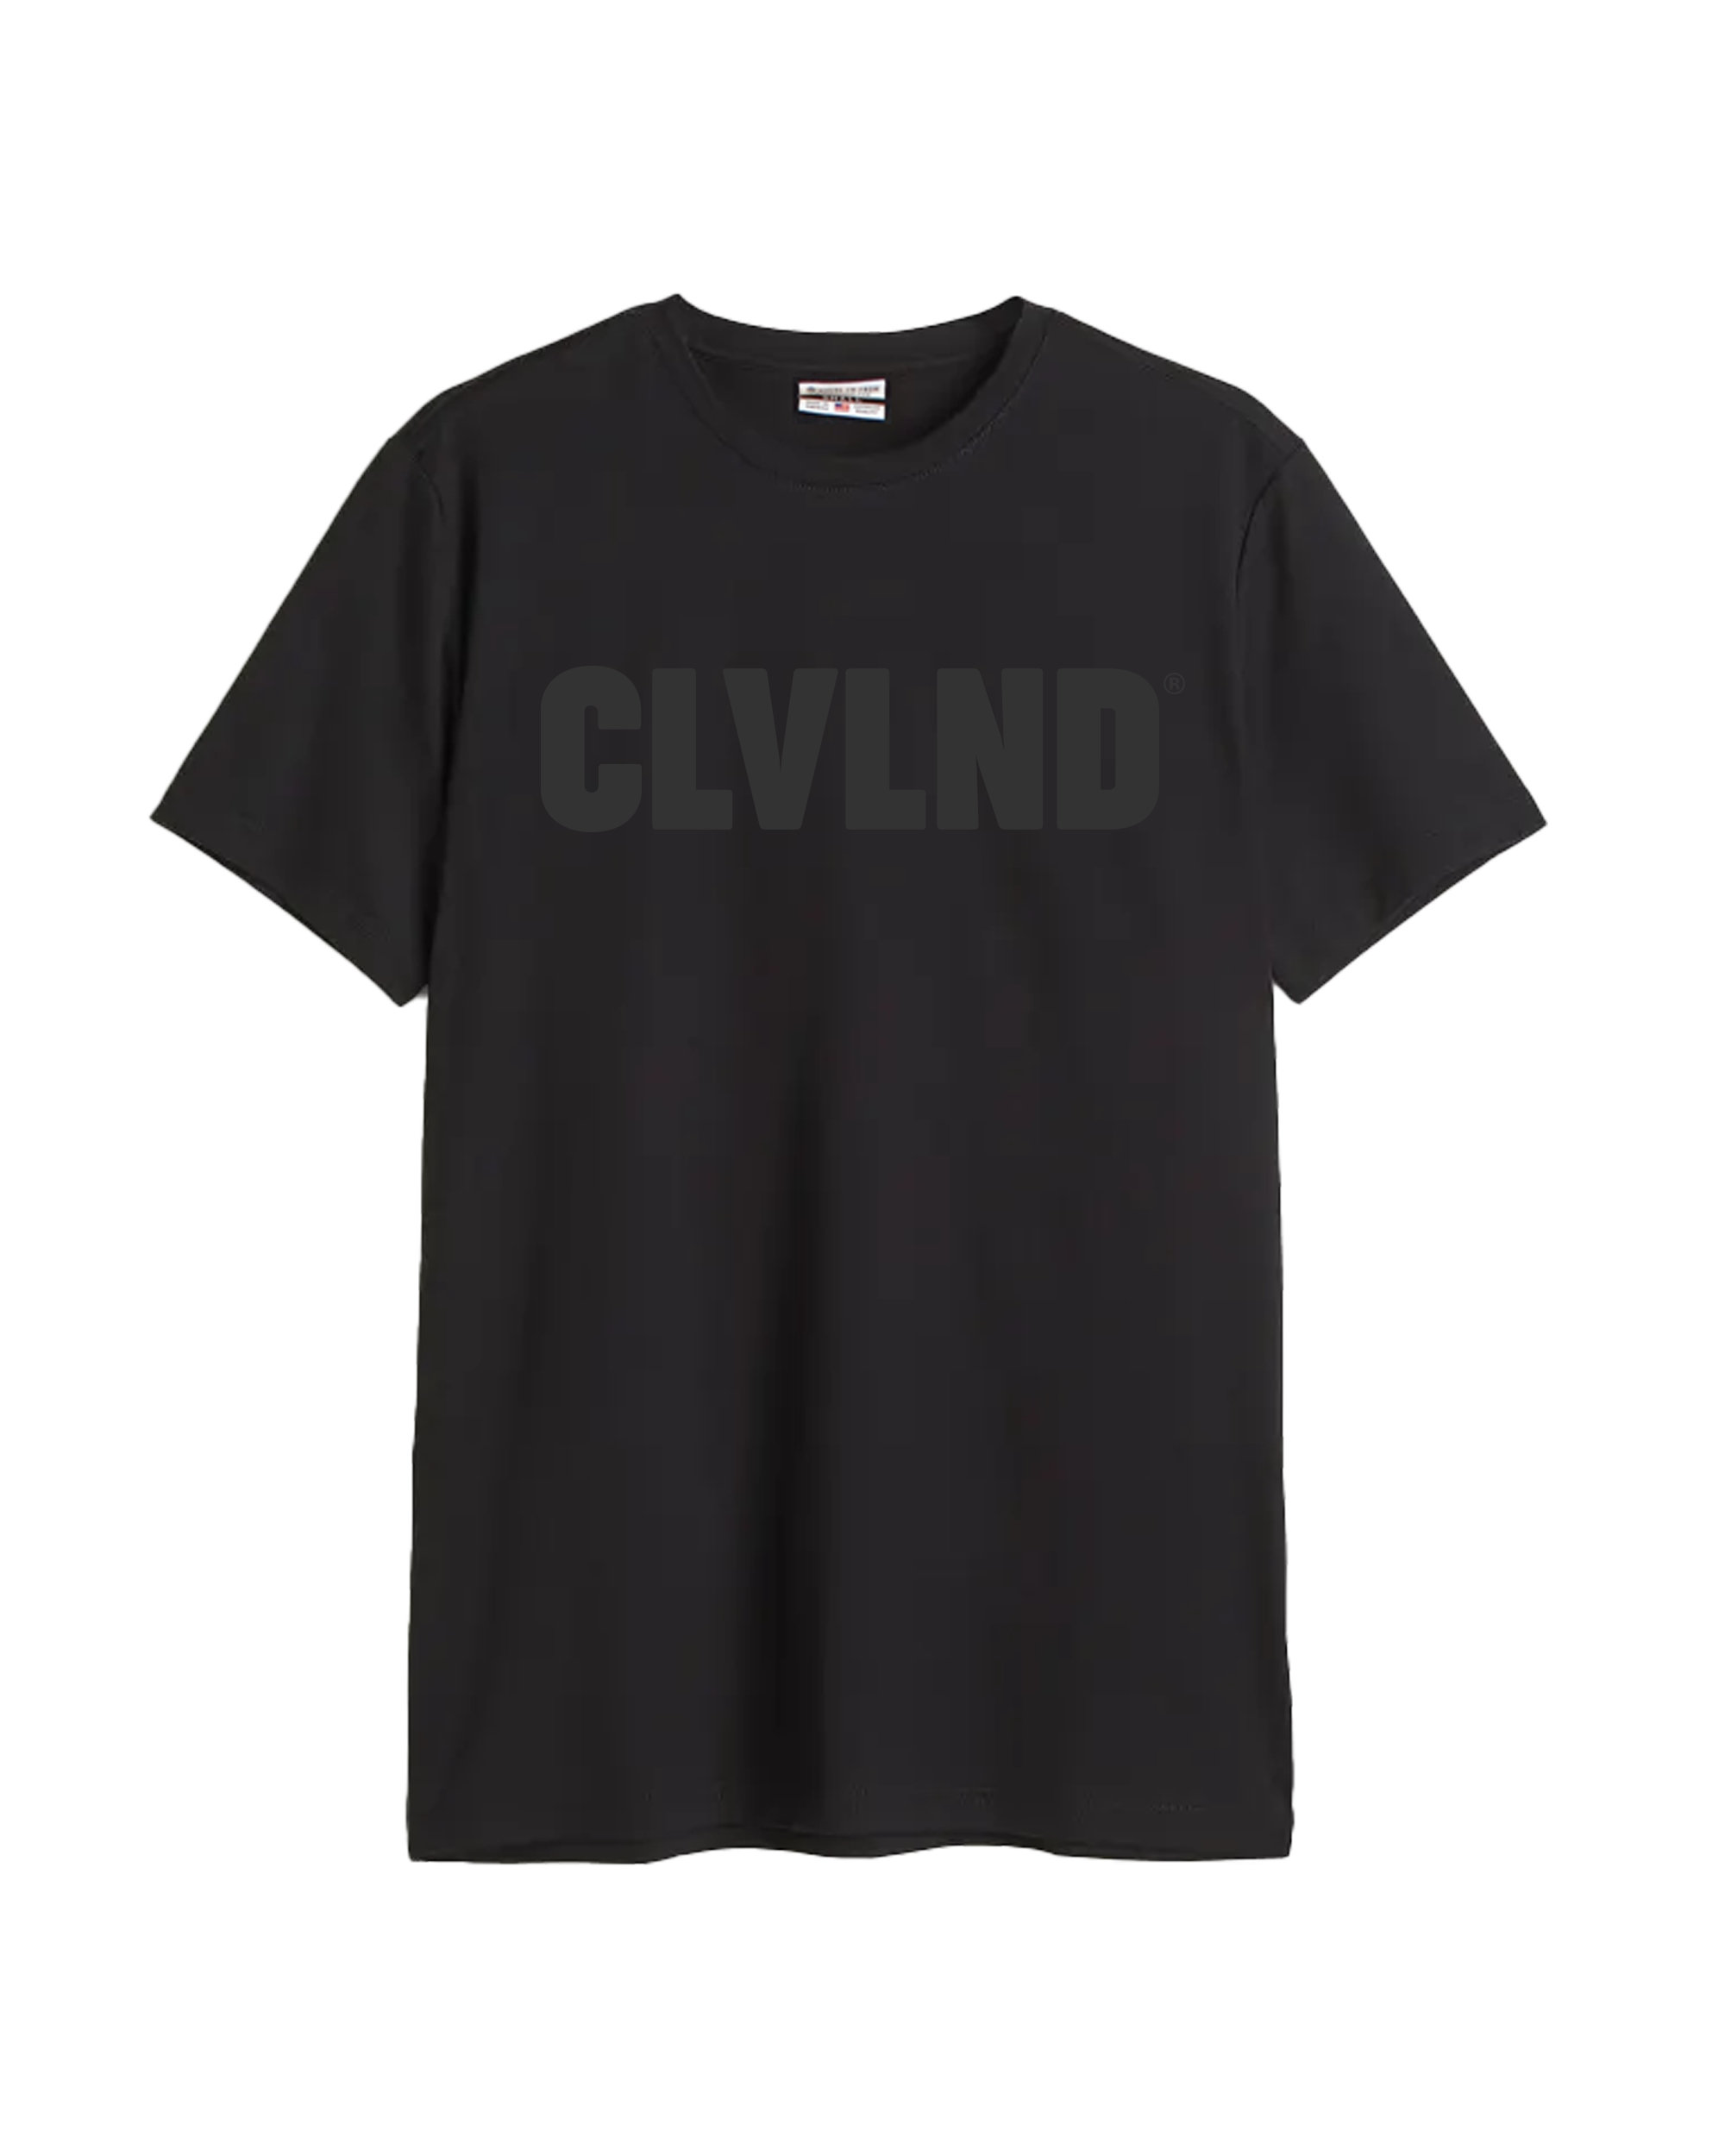 CLVLND Puff Print Cotton Crew T-Shirt